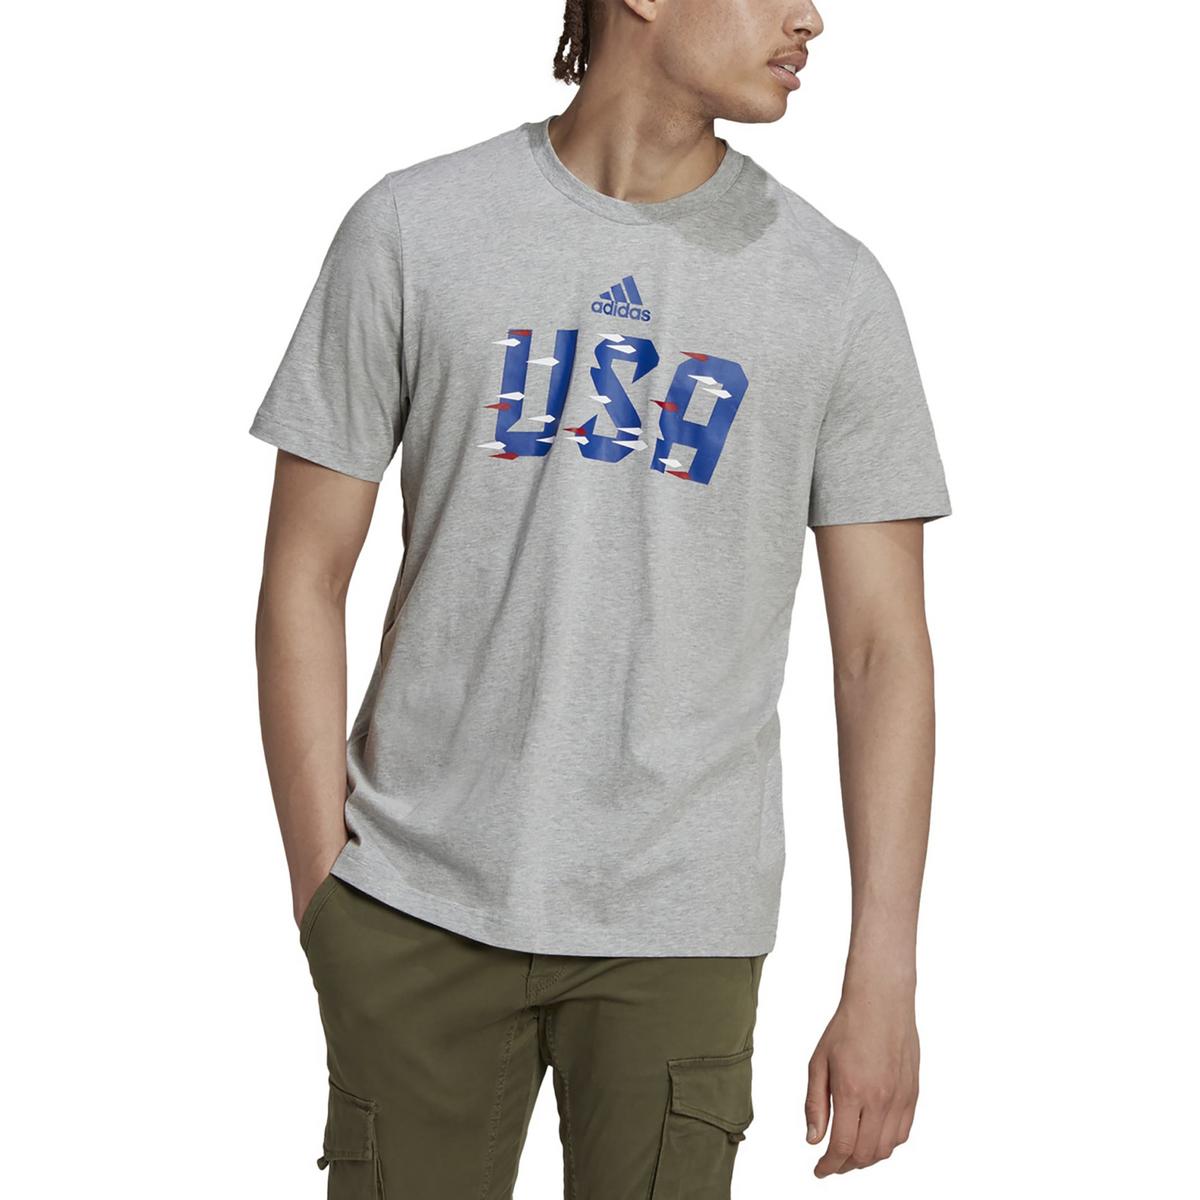 Adidas Mens Cotton Graphic Shirts & Tops